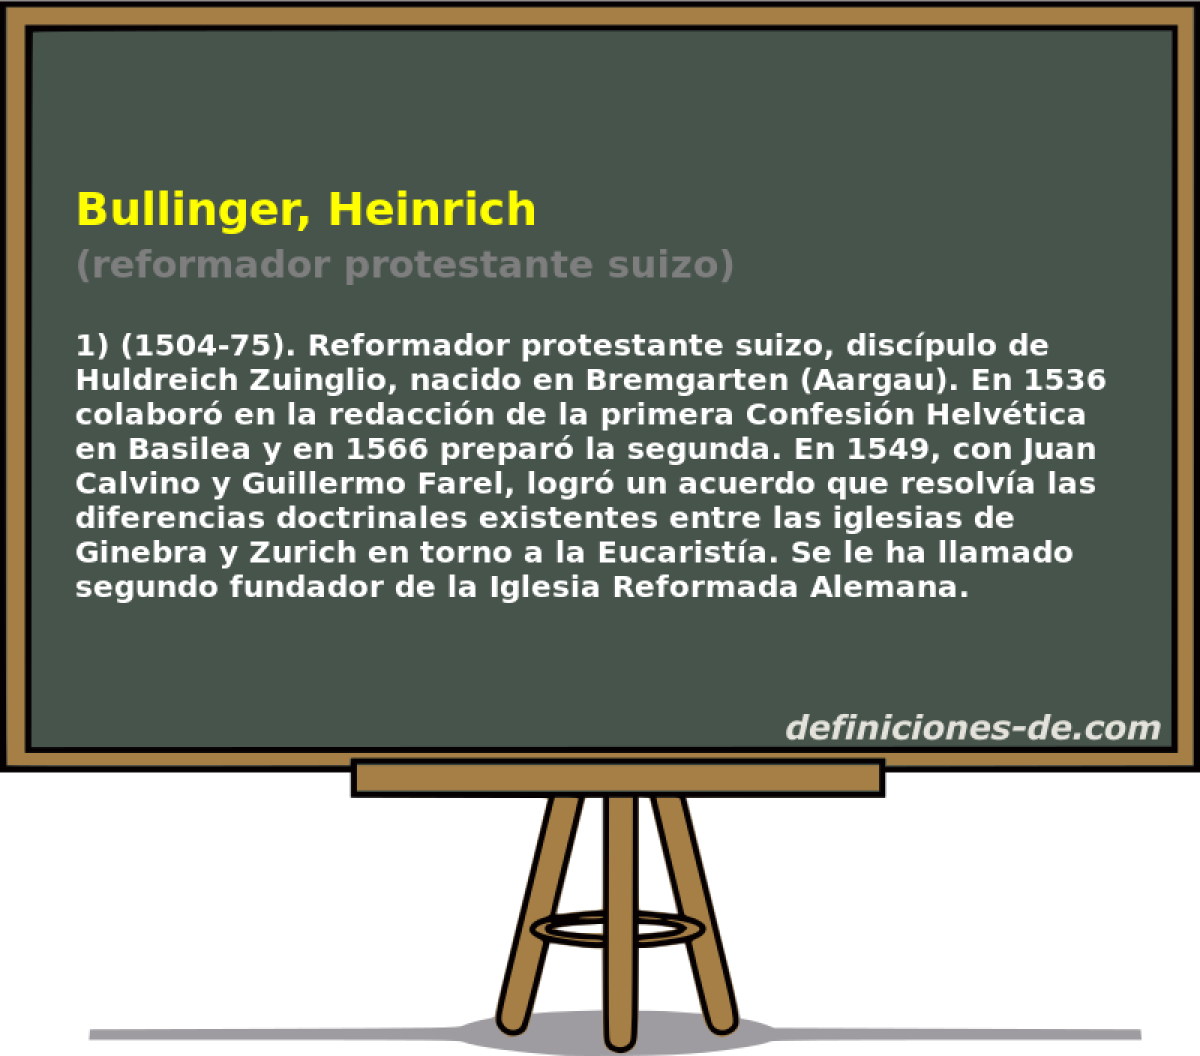 Bullinger, Heinrich (reformador protestante suizo)